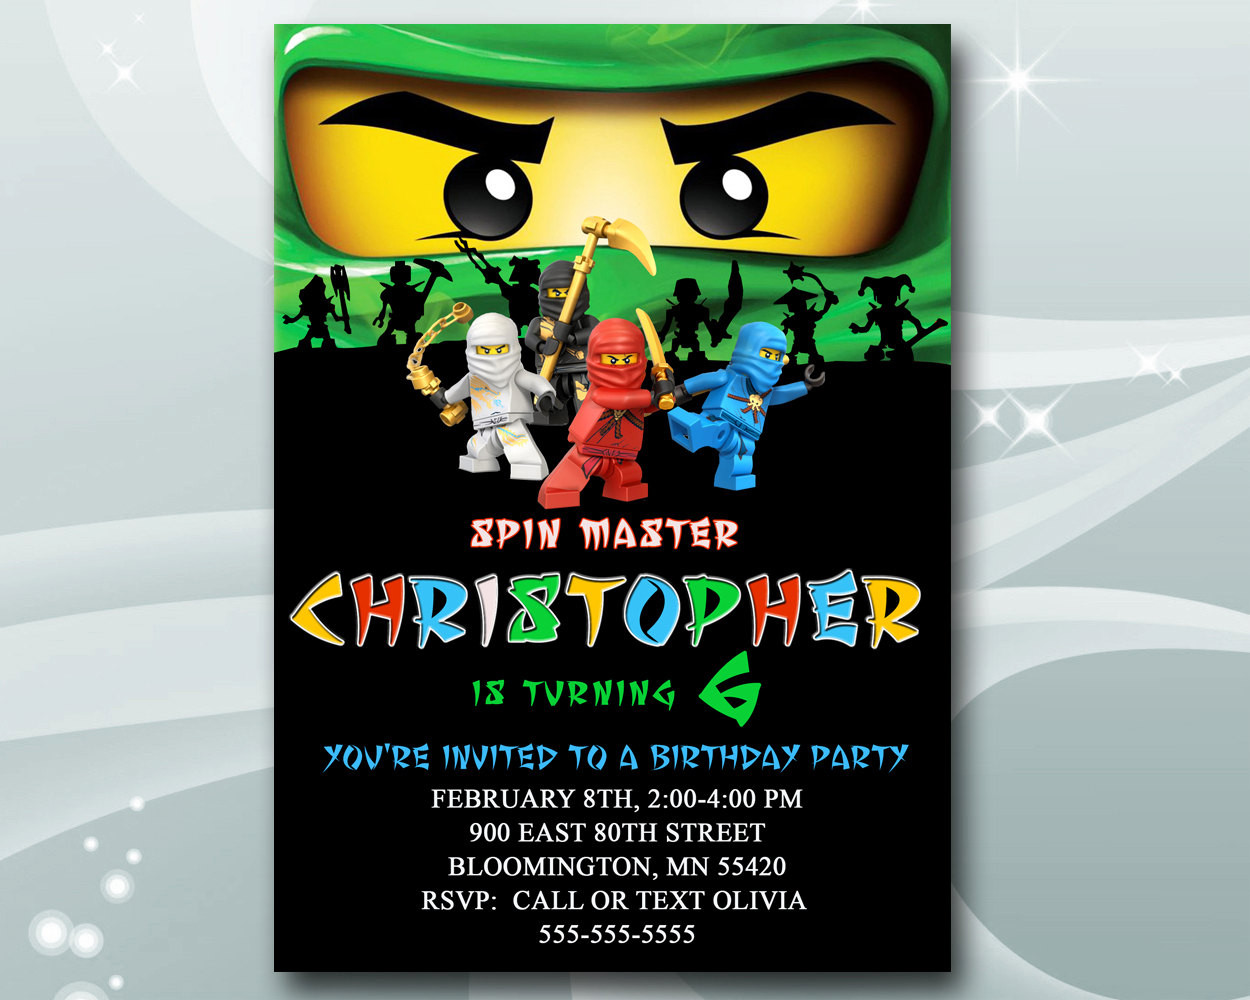 Best ideas about Ninjago Birthday Invitations
. Save or Pin Lego Ninjago Invitation for Birthday Party by SportBirthday Now.